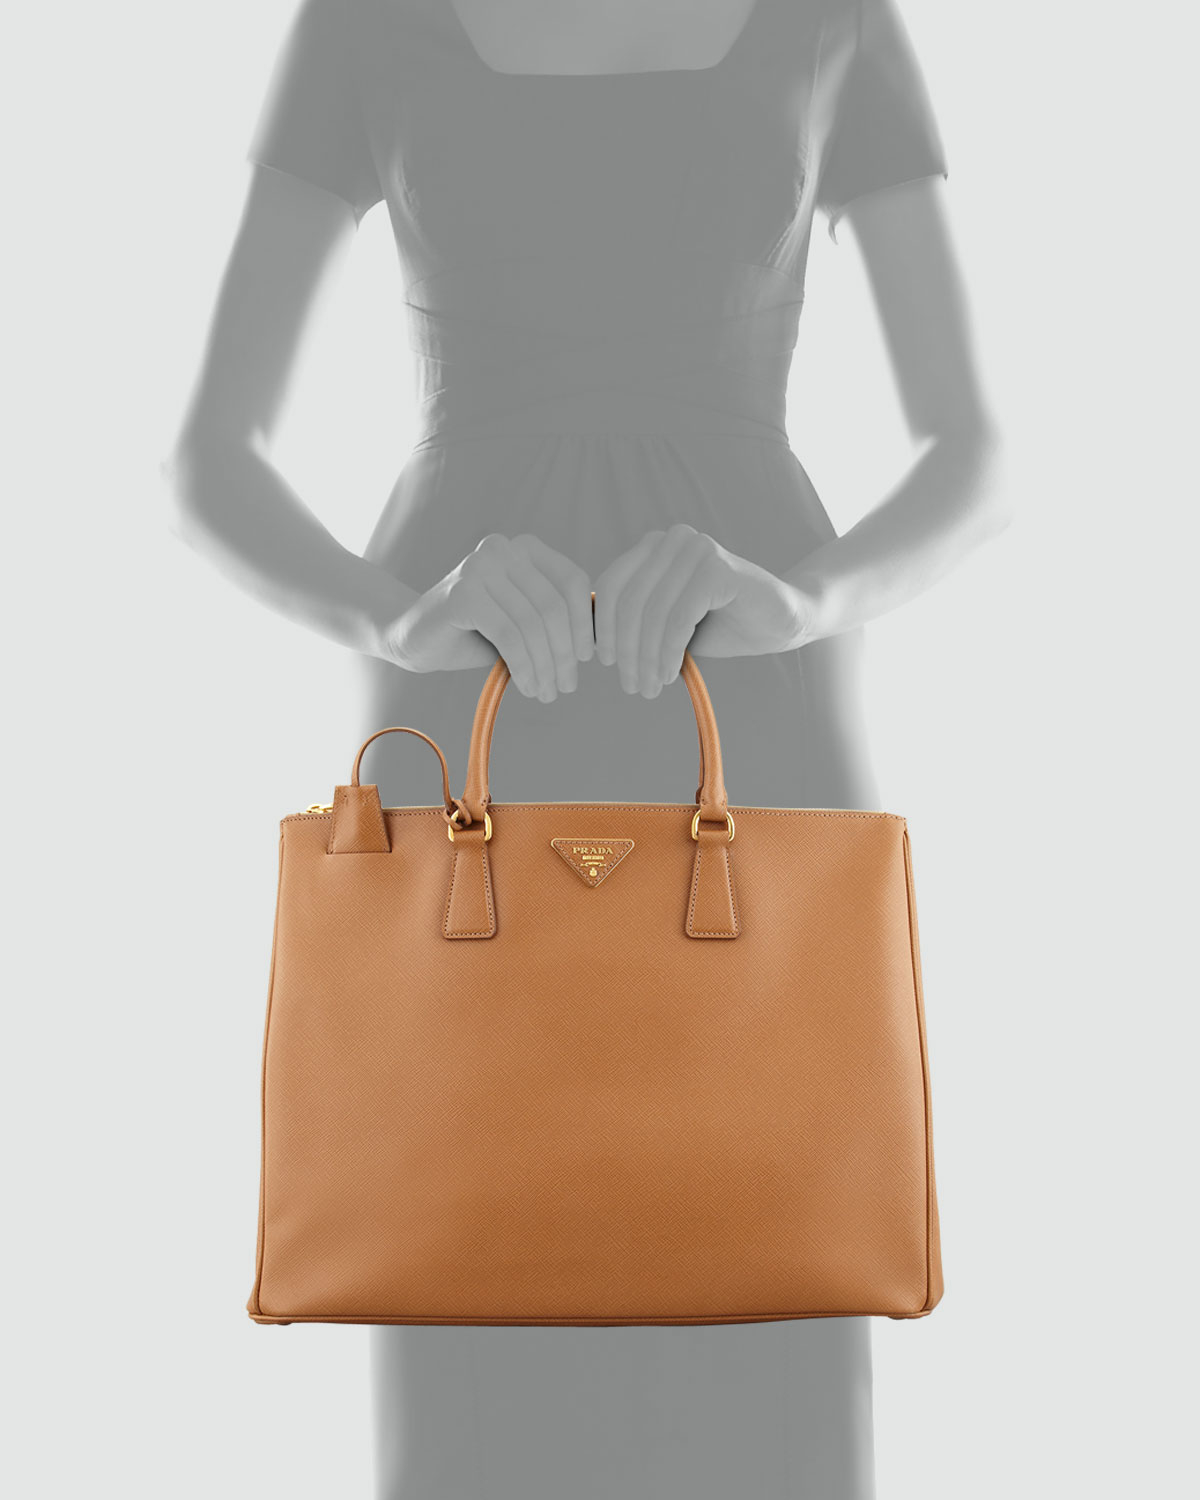 authentic prada bags prada handbags  